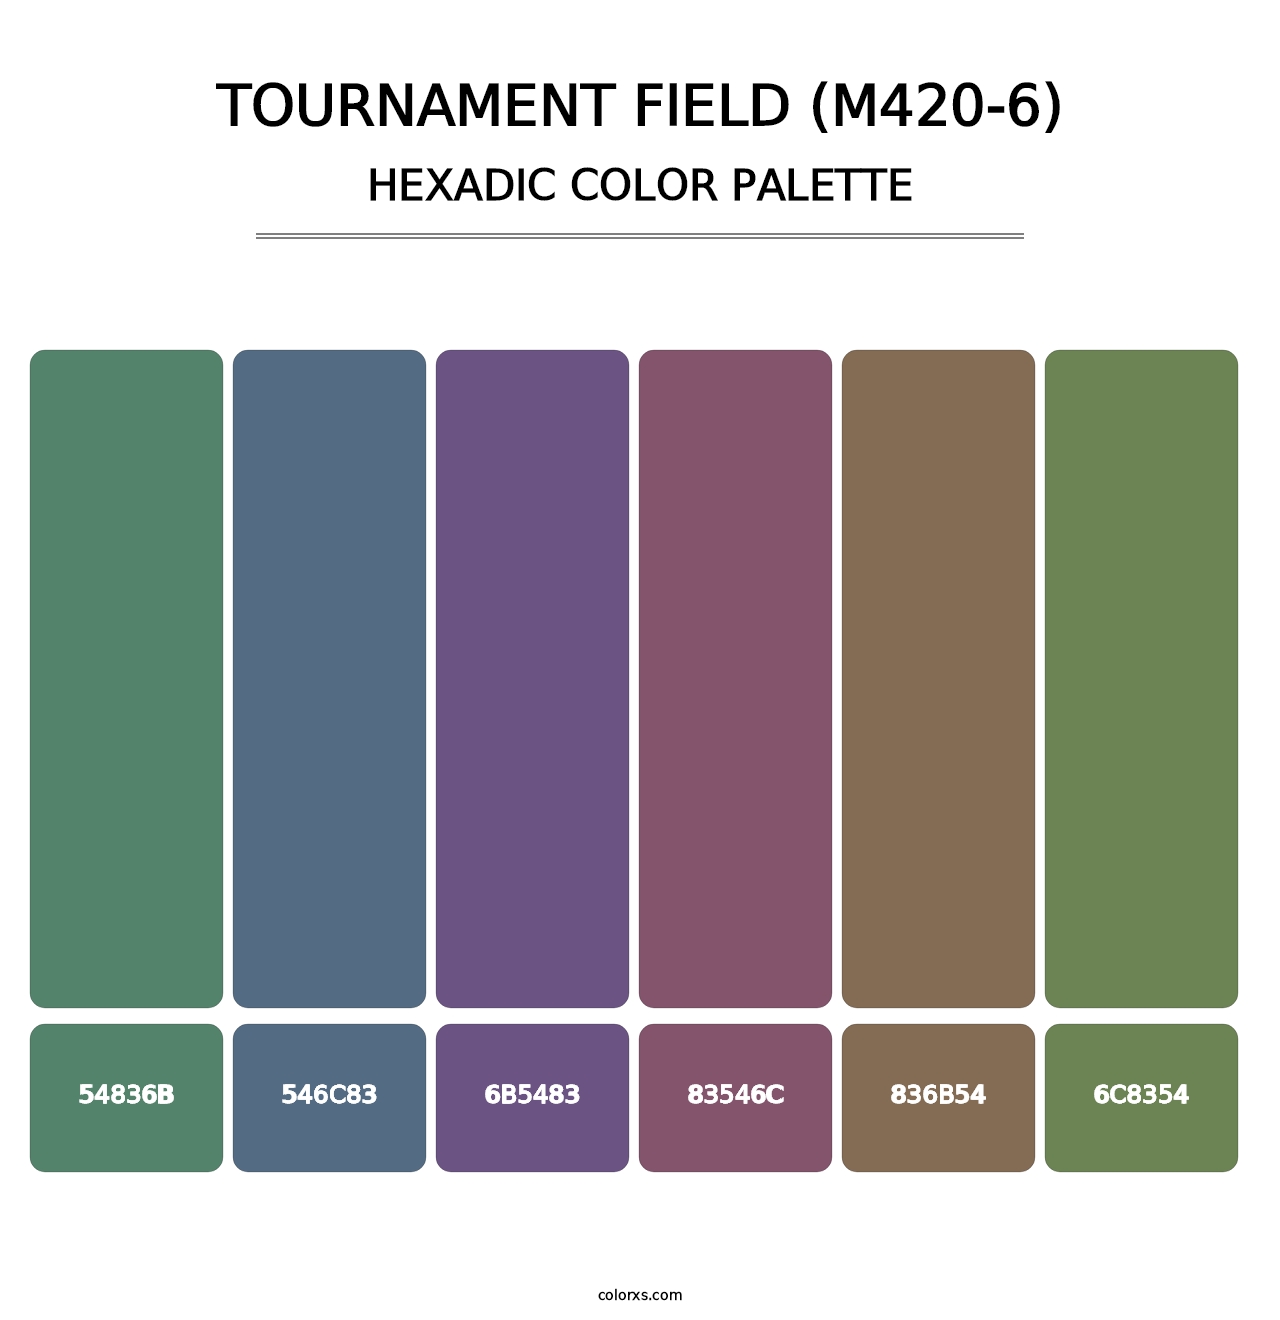 Tournament Field (M420-6) - Hexadic Color Palette